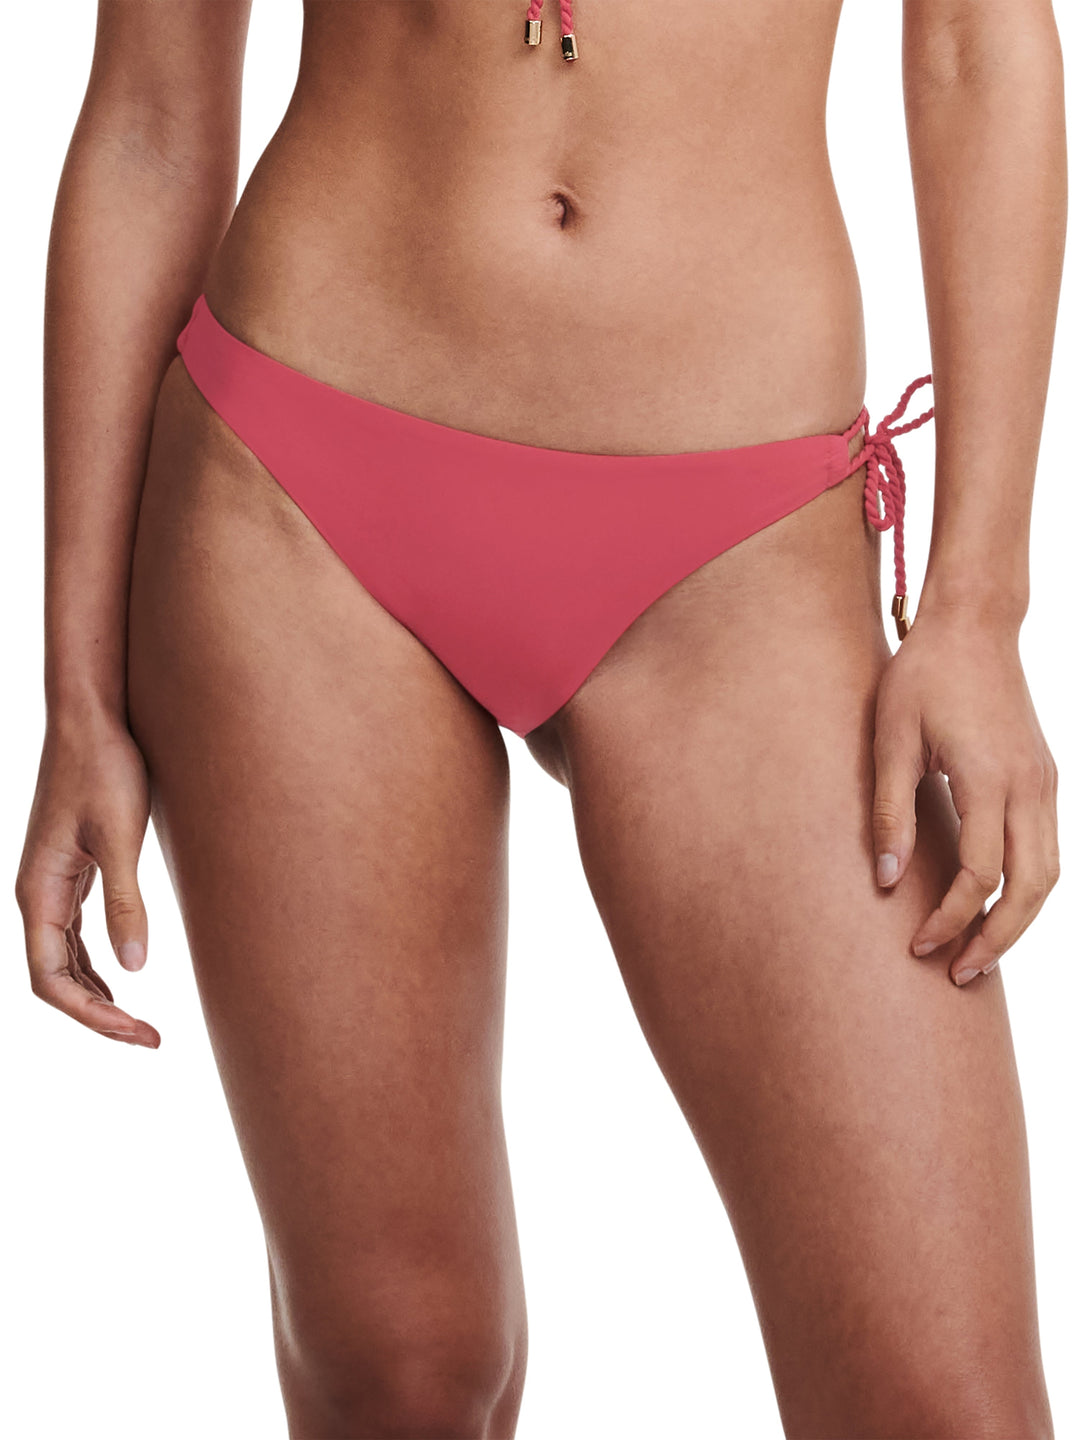 Chantelle Swimwear Inspire Bikini - Garnet Red Full Cup Bikini Chantelle 